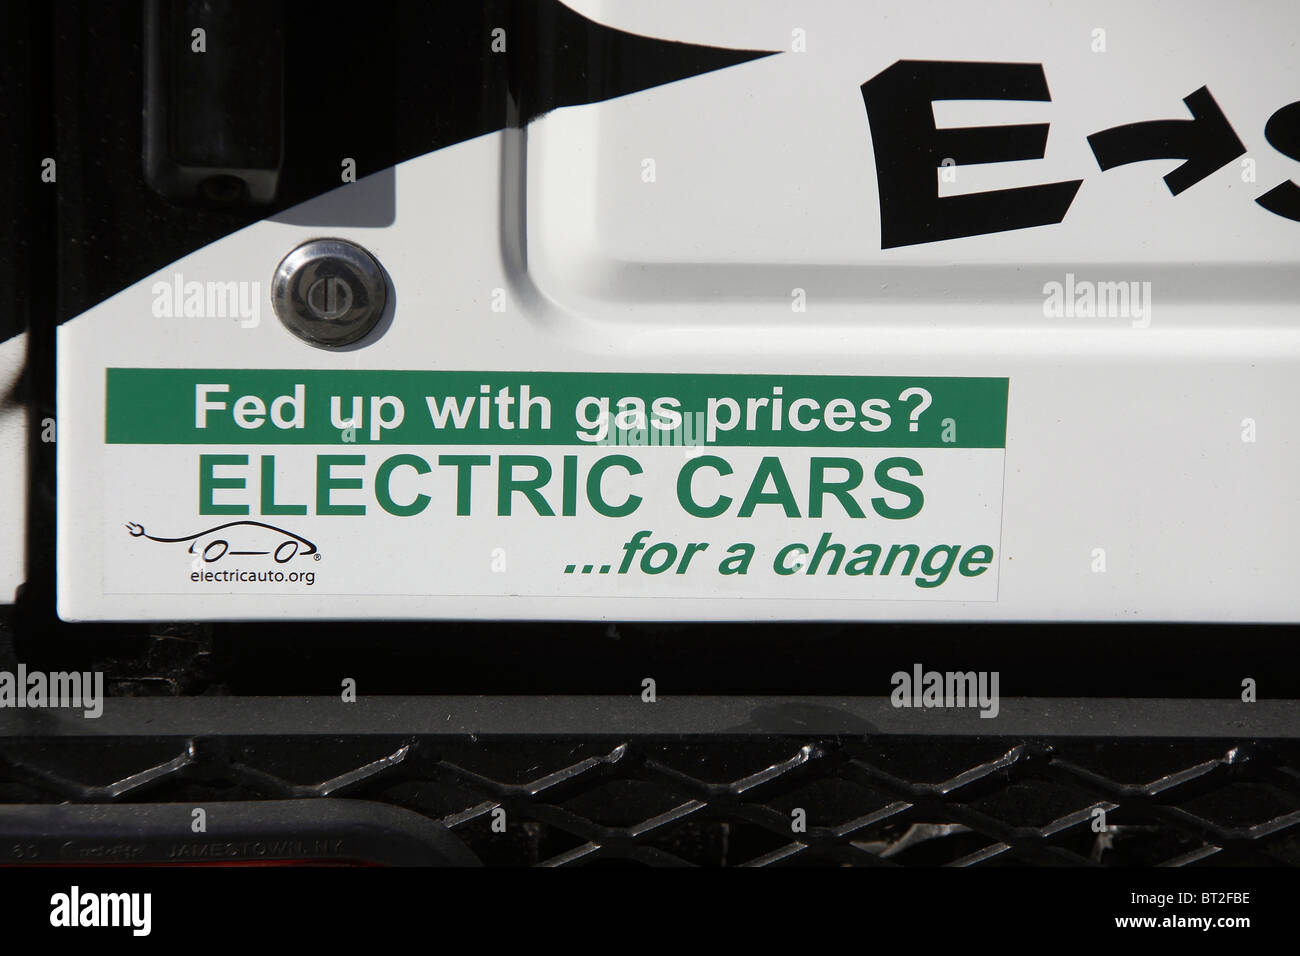 Close up stock photo of a symbol on a hybrid car on display promoting alternative transportation Stock Photo